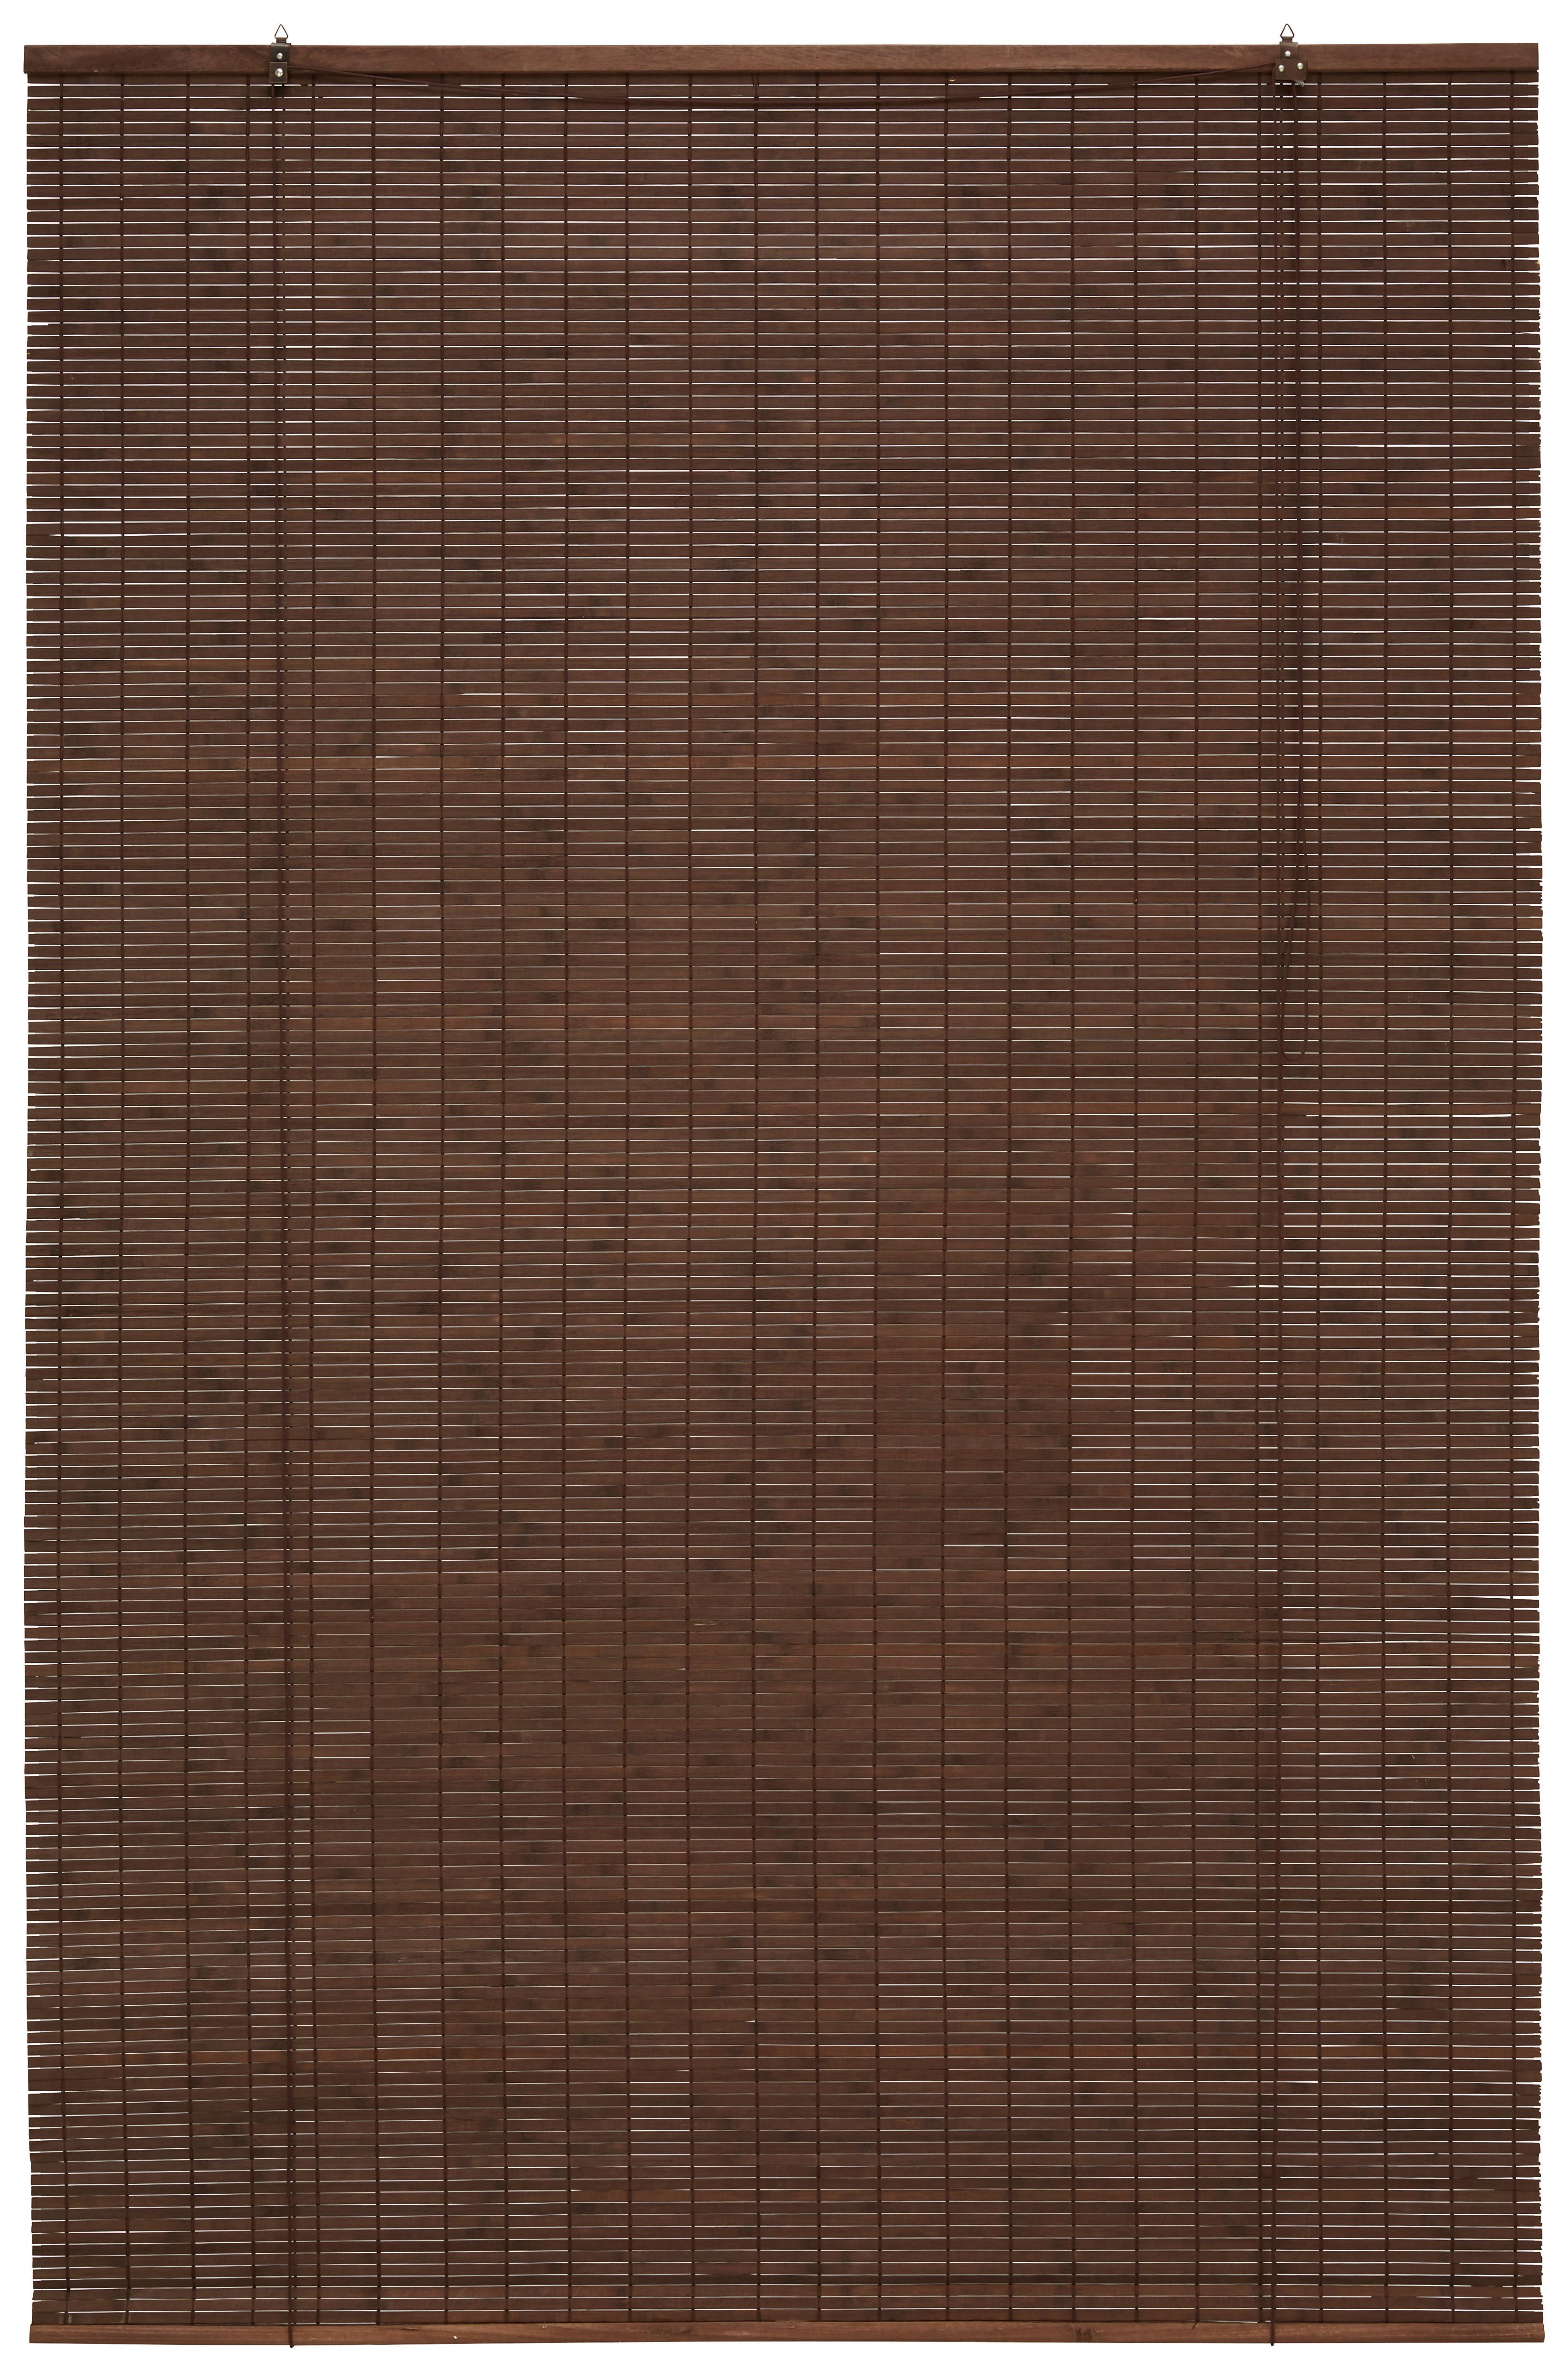 Rolo Zavjesa 100/180cm Woody - tamno smeđa, Lifestyle, drvo (100/180cm) - Modern Living